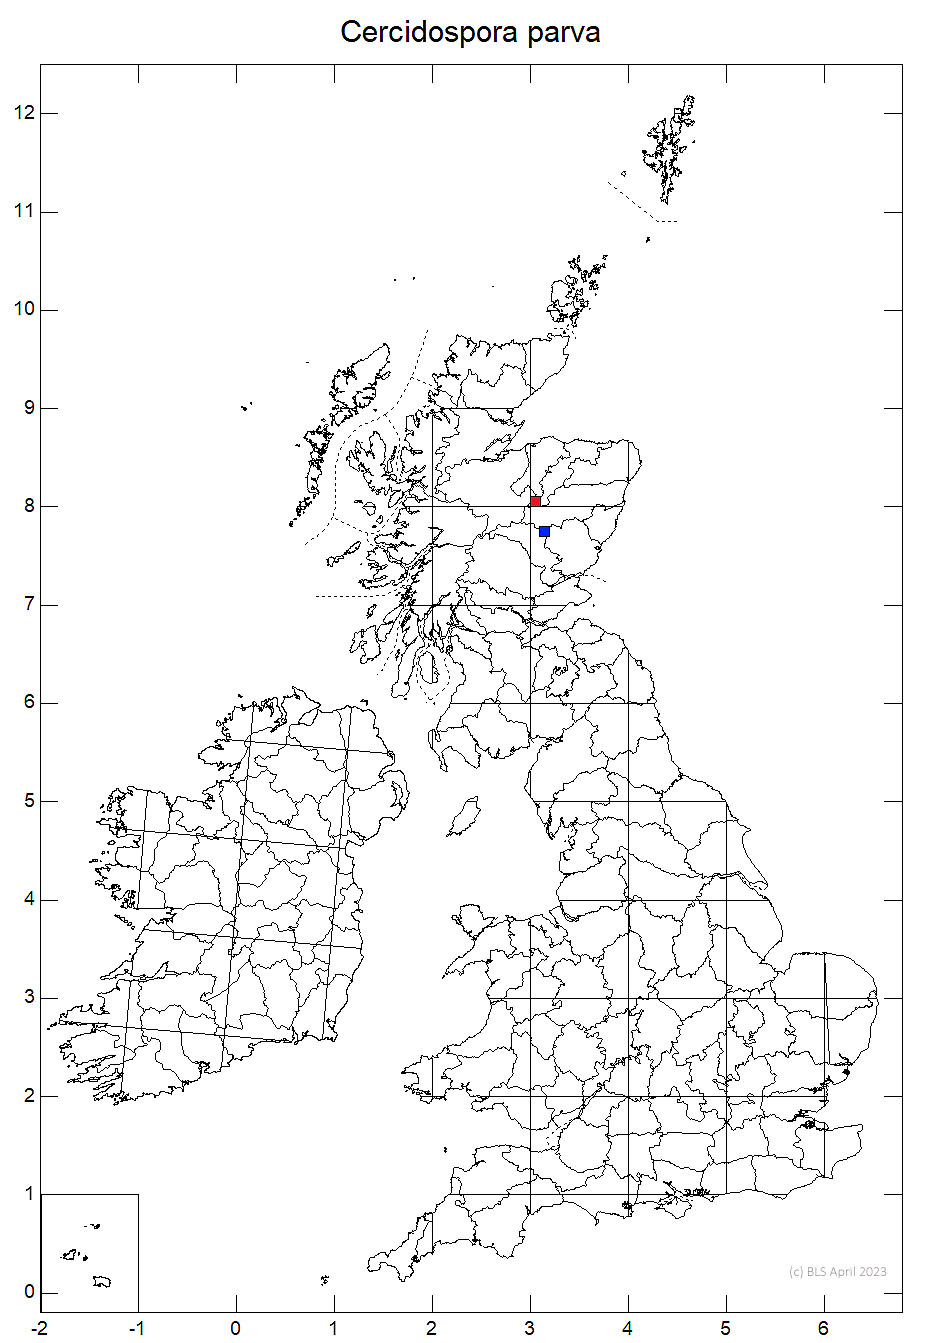 Cercidospora parva 10km sq distribution map